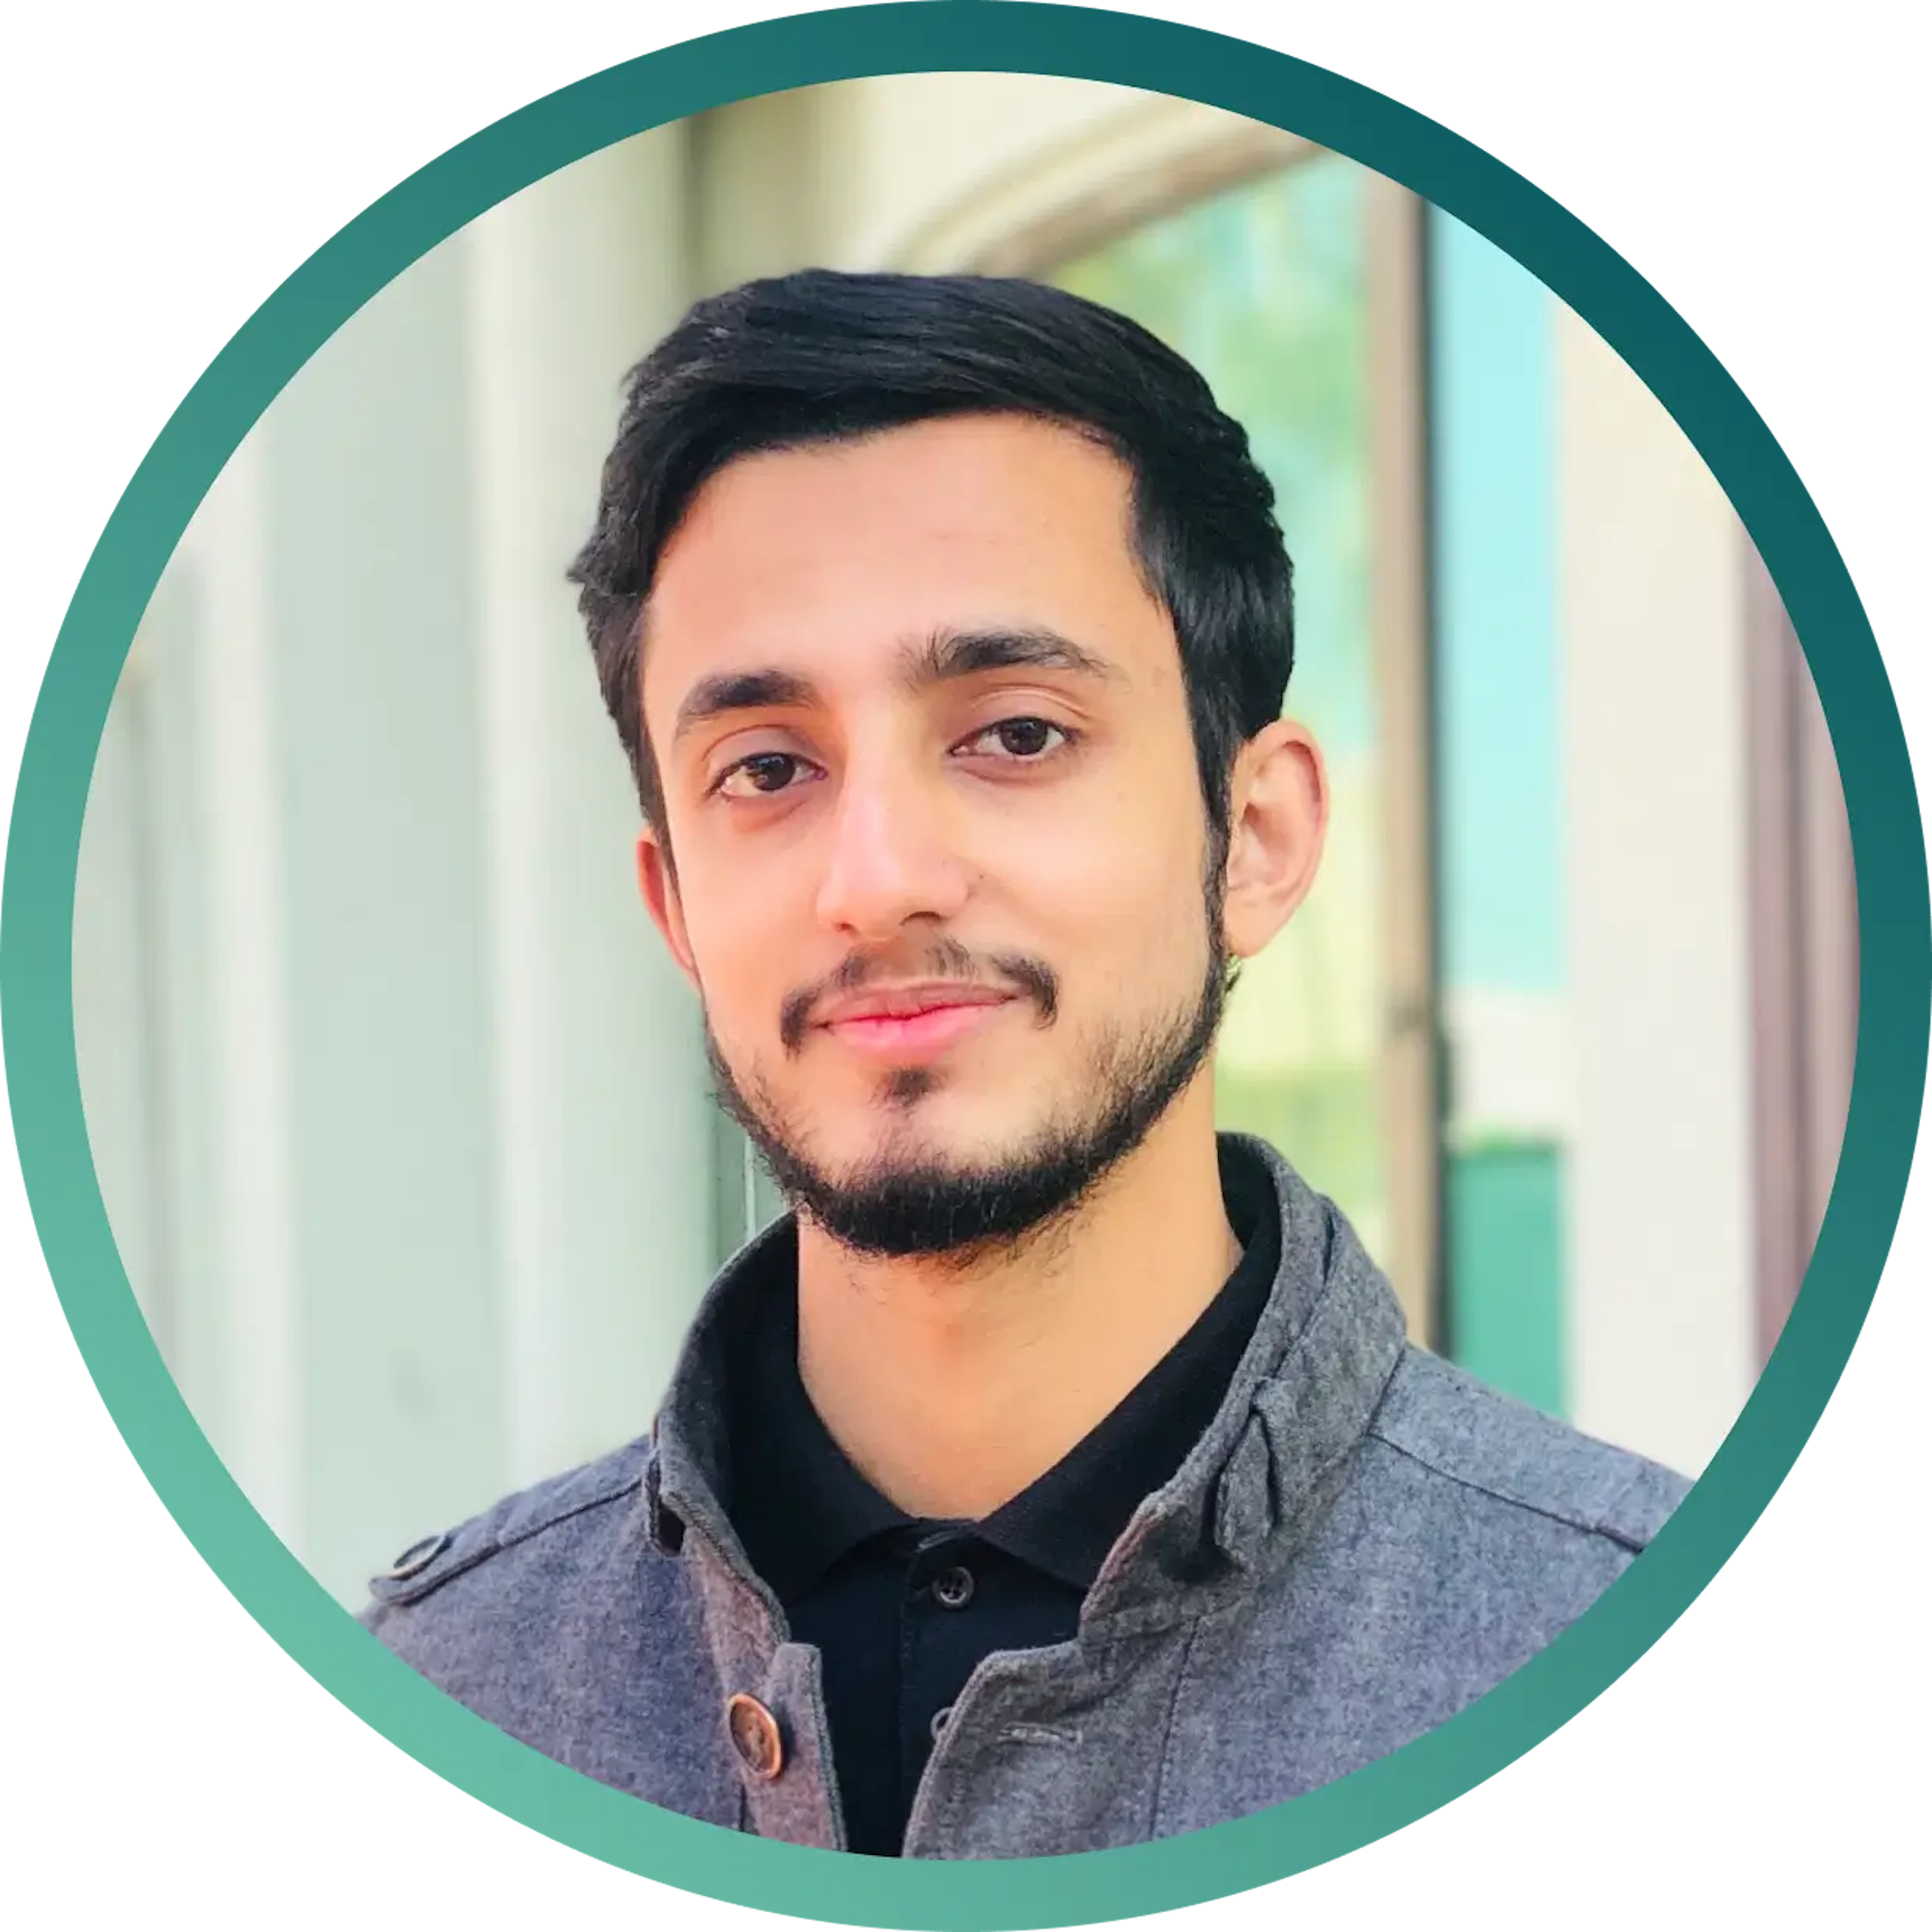 hamza ahmad is an experience frontend web developer